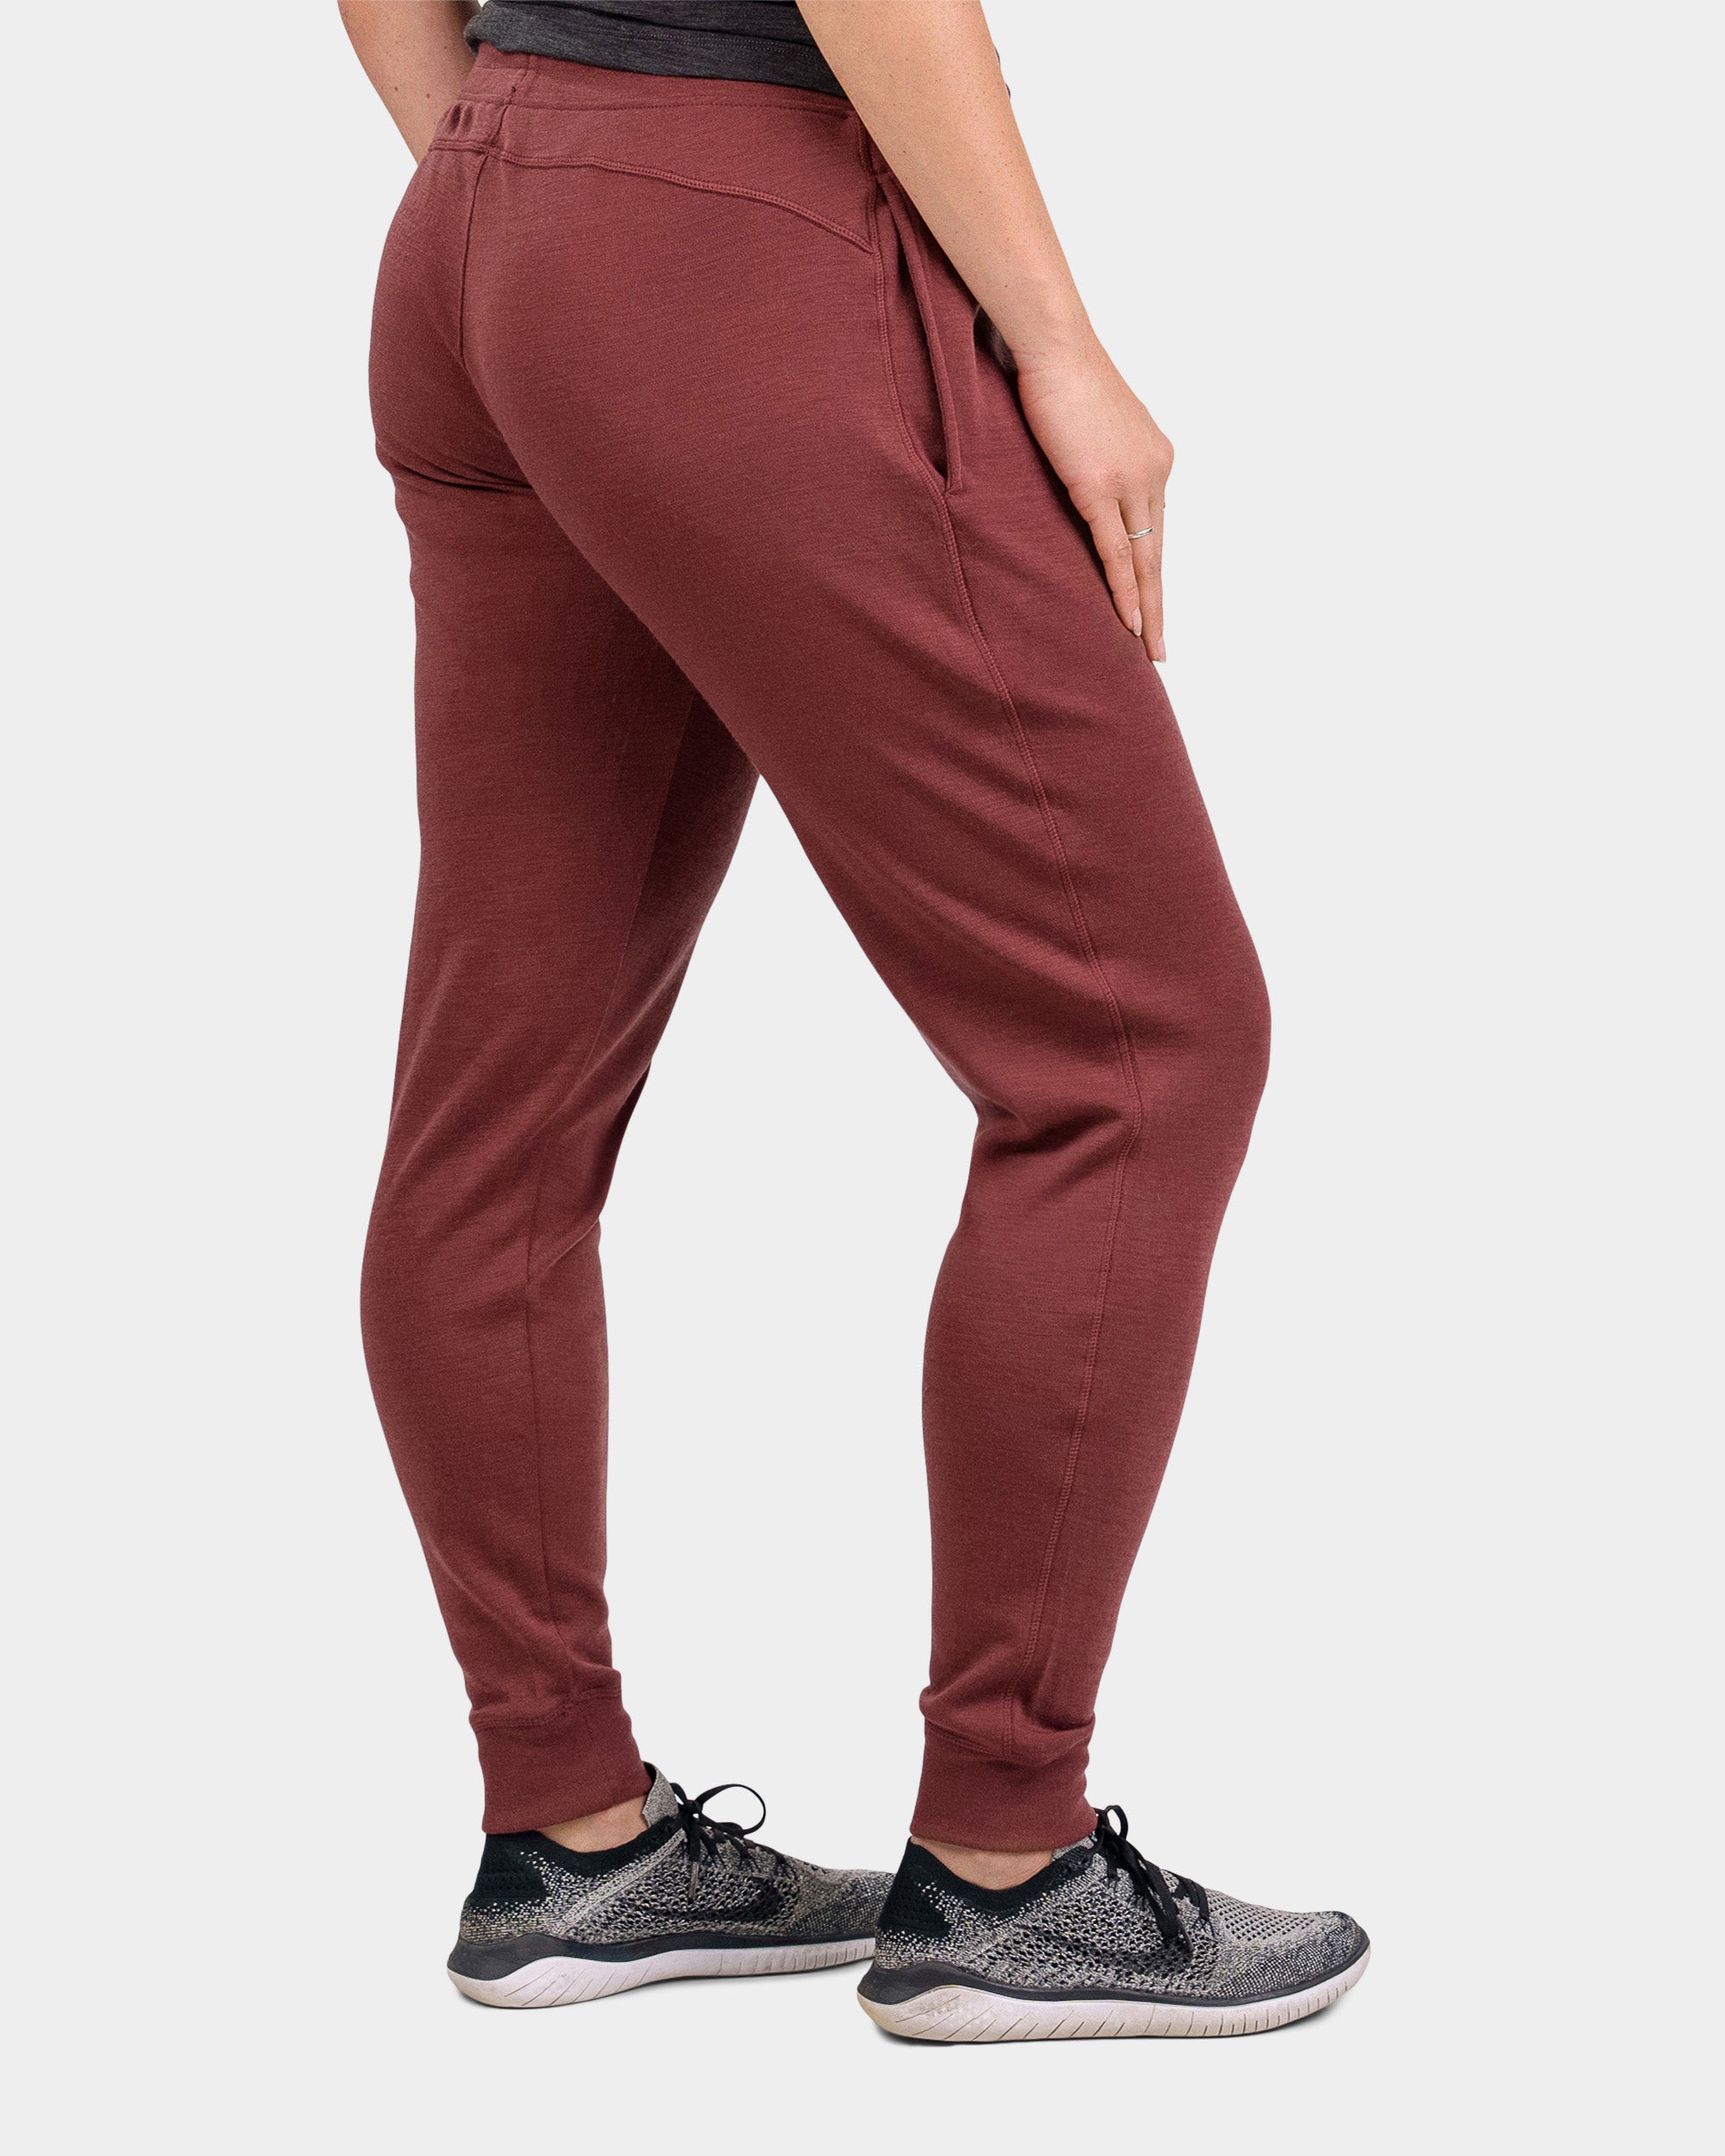 32 Degrees Women's Super Soft Stretch Comfort Hand Pockets Active Pants  Joggers-Purple / S